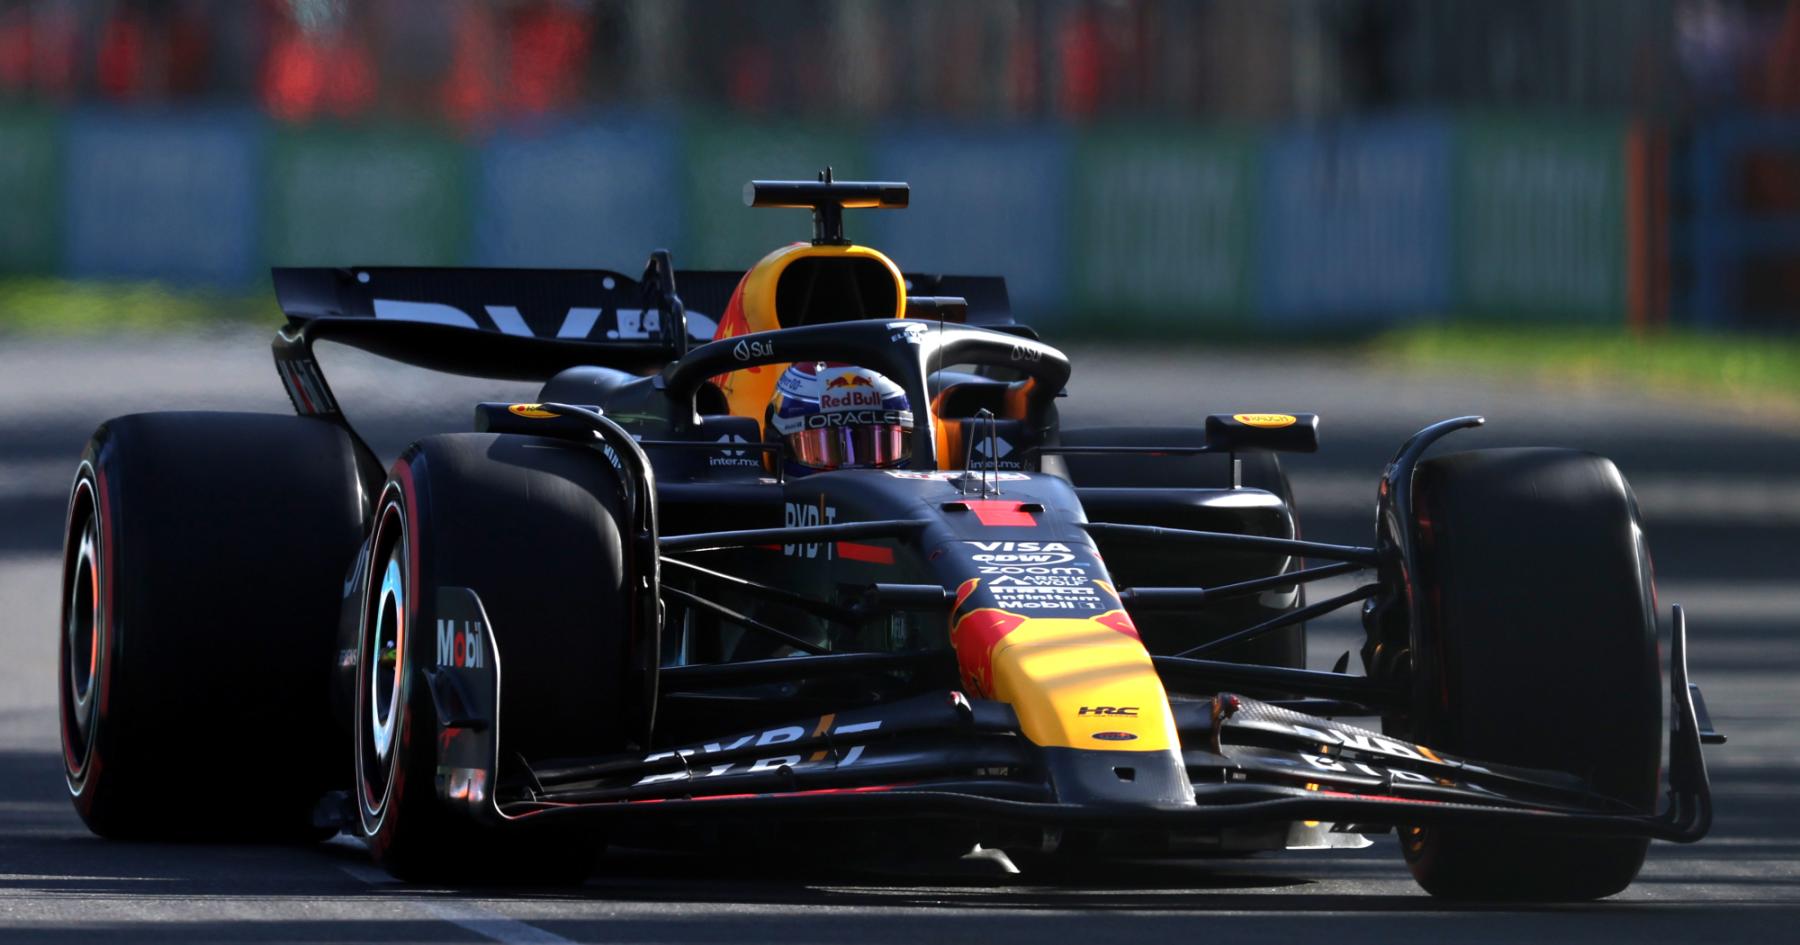 The Unforeseen Exit: Verstappen's Stunning Departure from the Australian GP